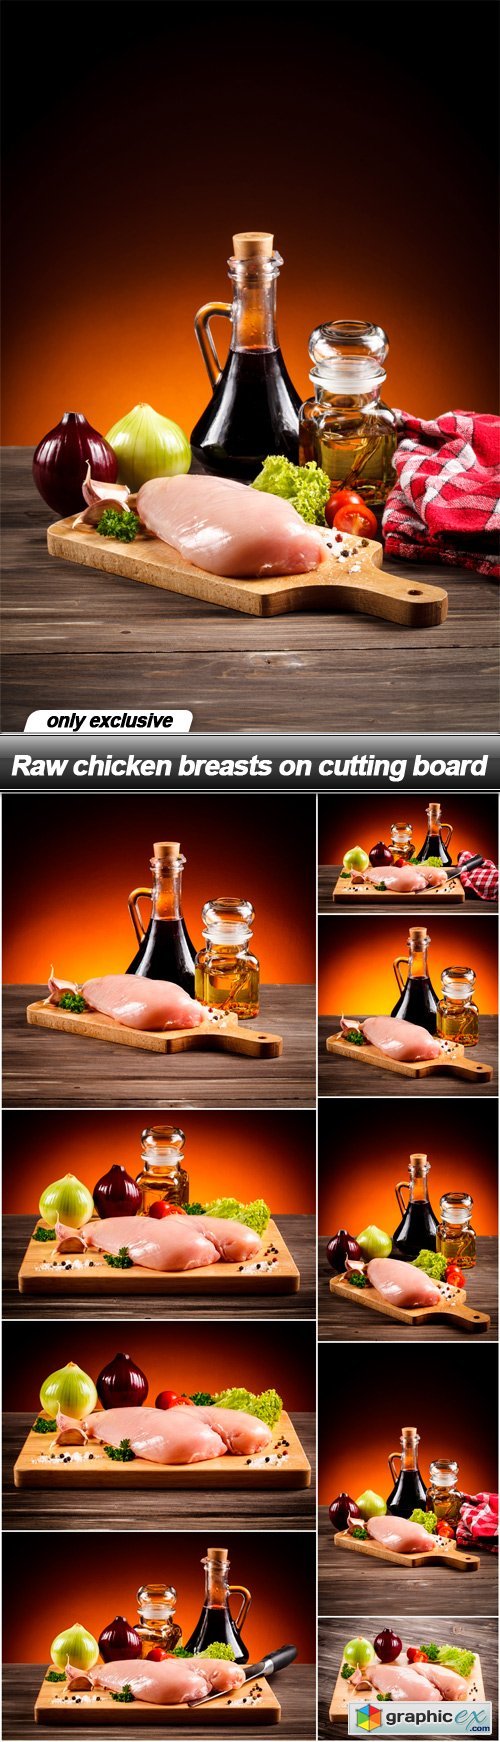 Raw chicken breasts on cutting board - 9 UHQ JPEG